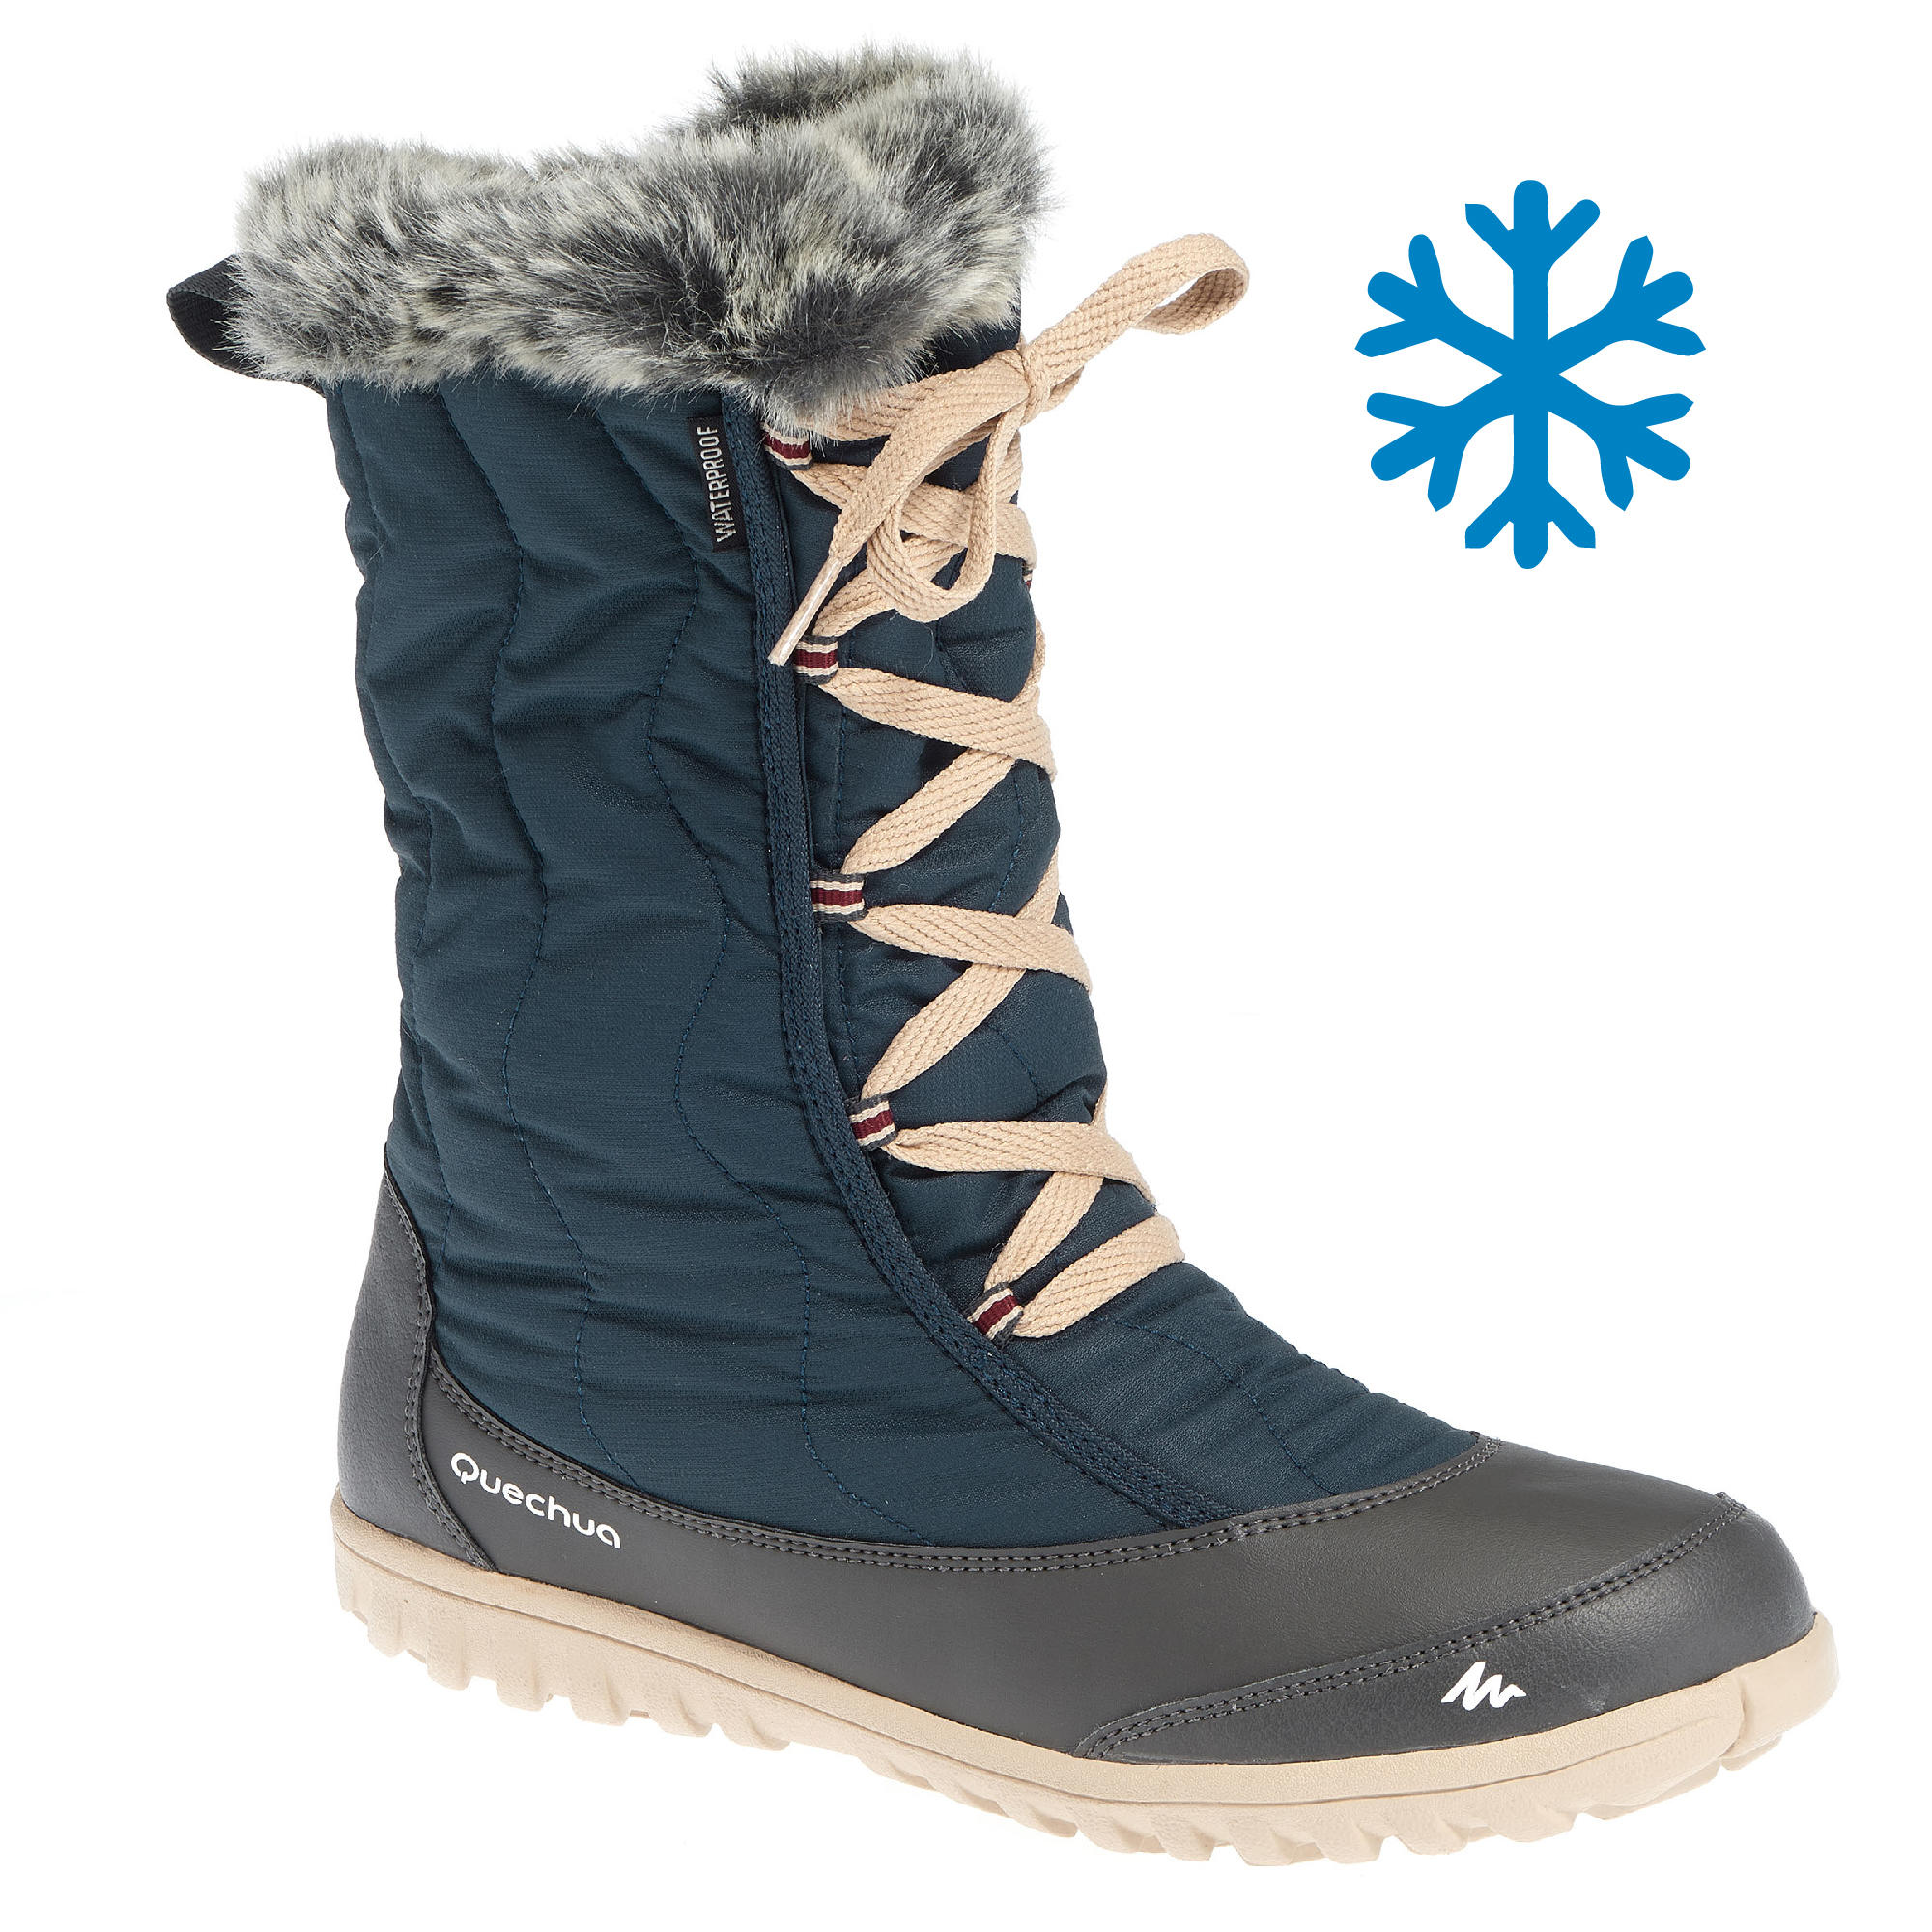 Buy Women's Snow Hiking Boots Online | Quechua Women's SnowHiking Boot